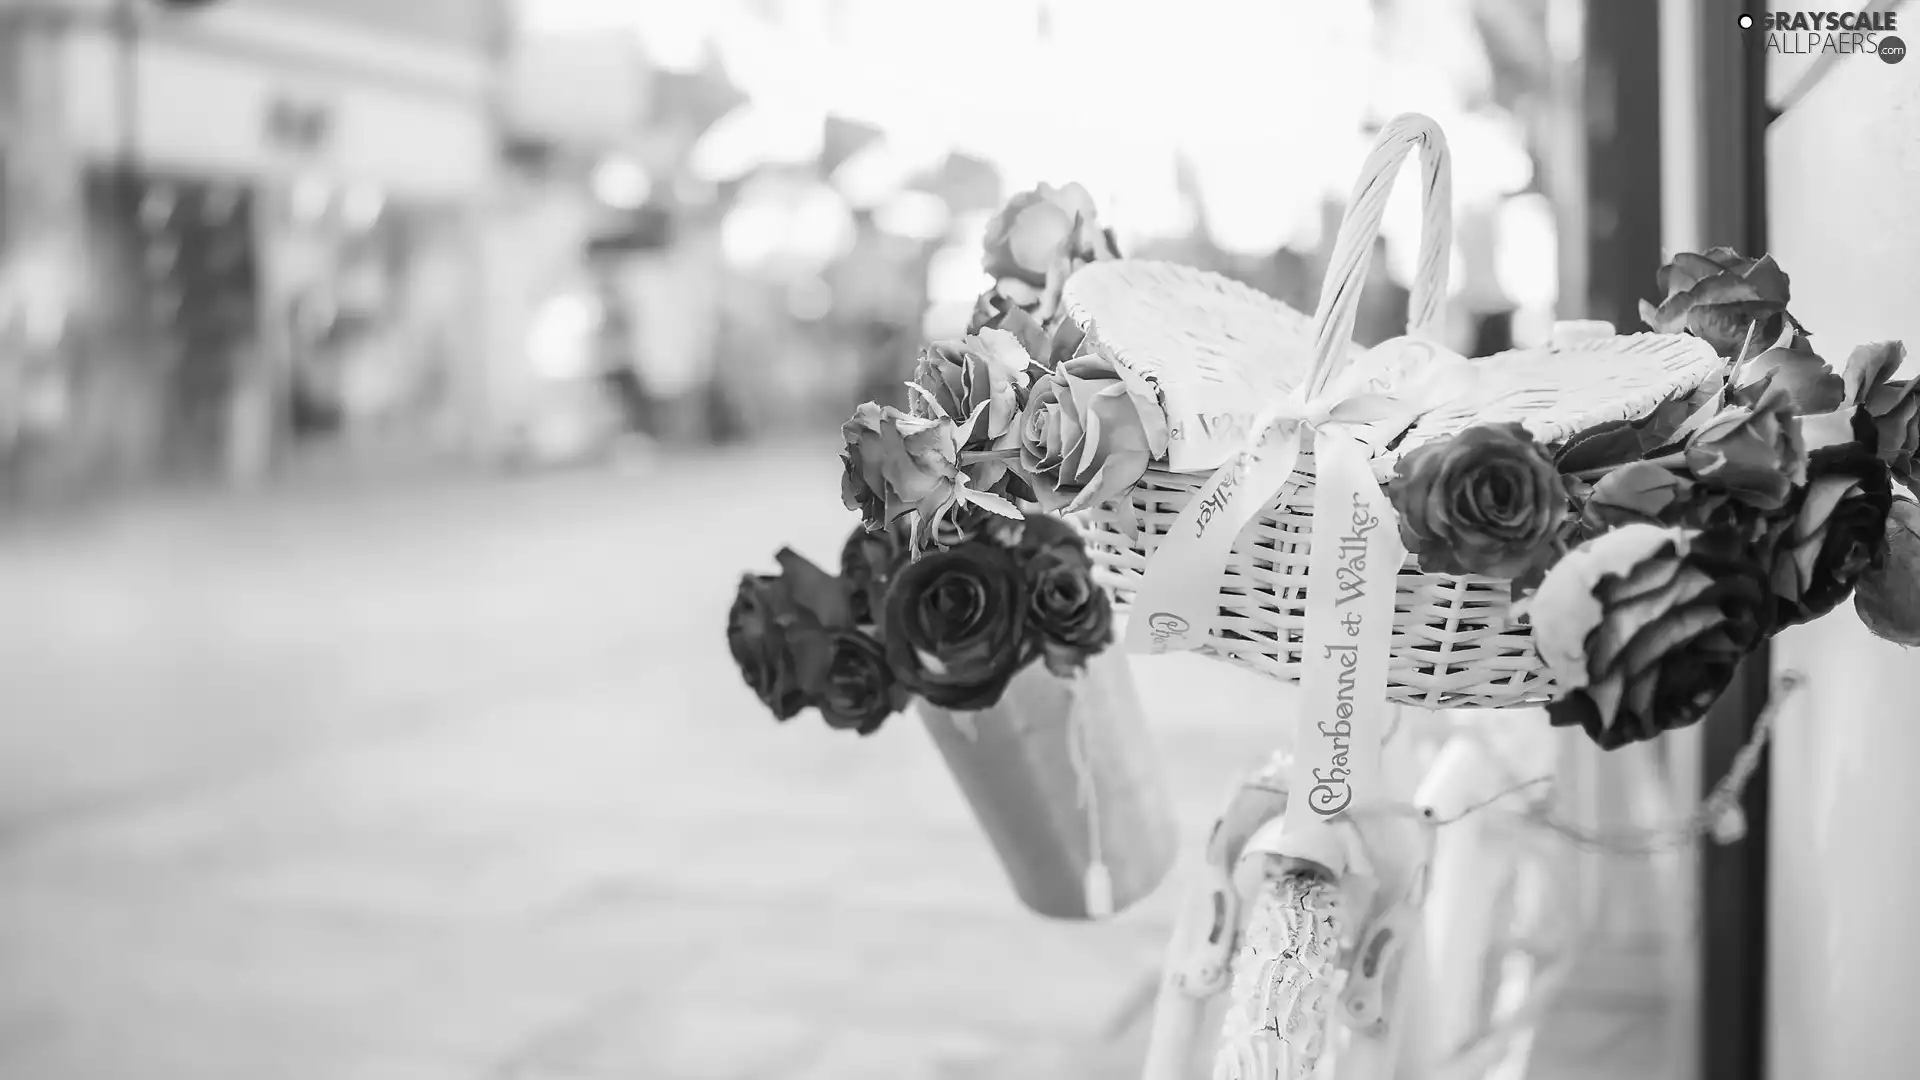 roses, blur, White, basket, Bike